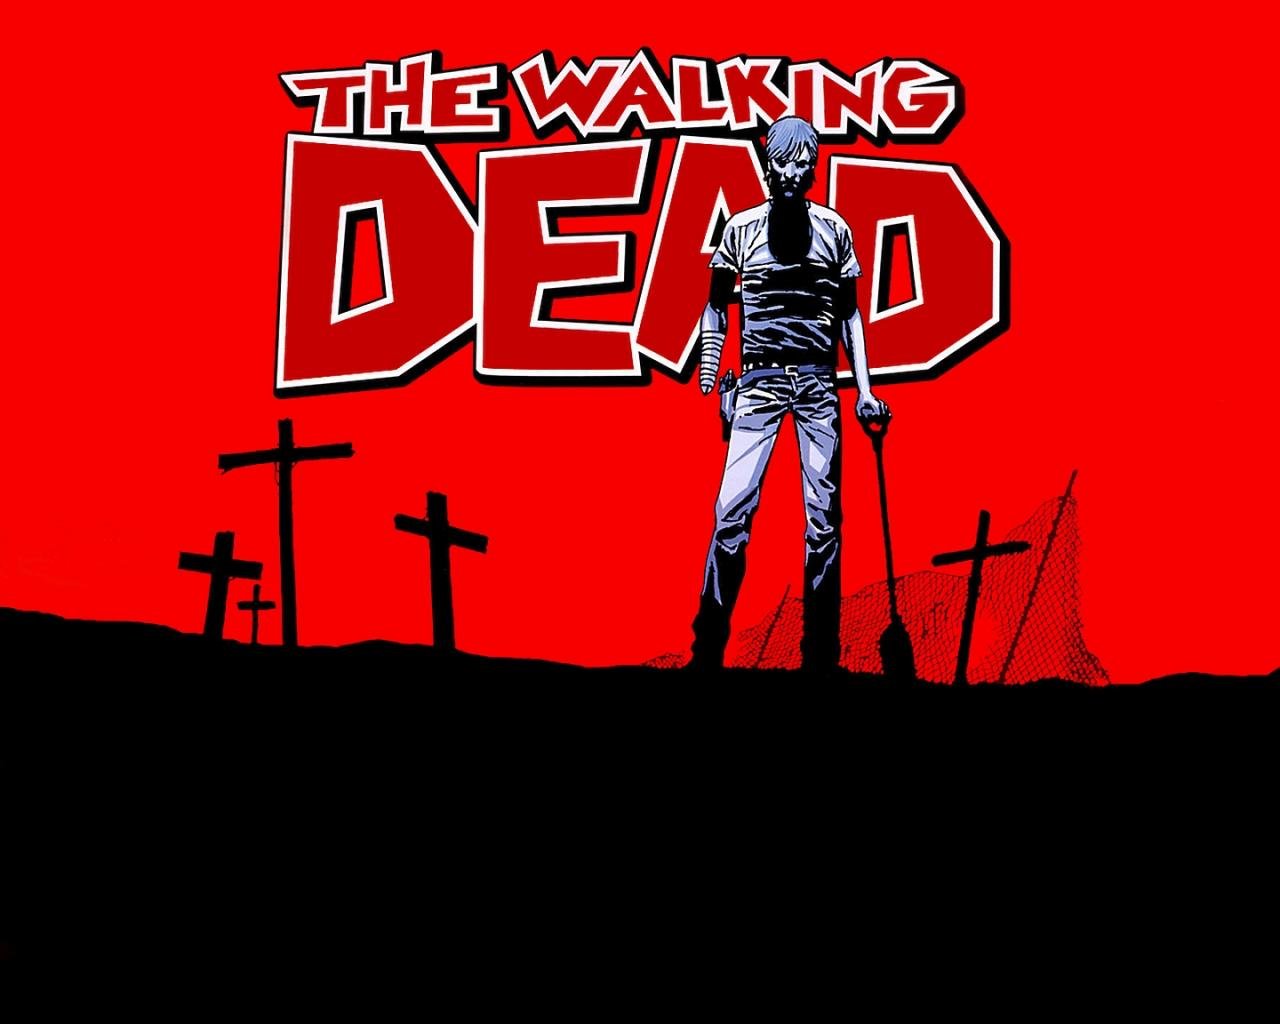 Best Walking Dead Comics wallpaper ID:84271 for High Resolution hd 1280x1024 PC